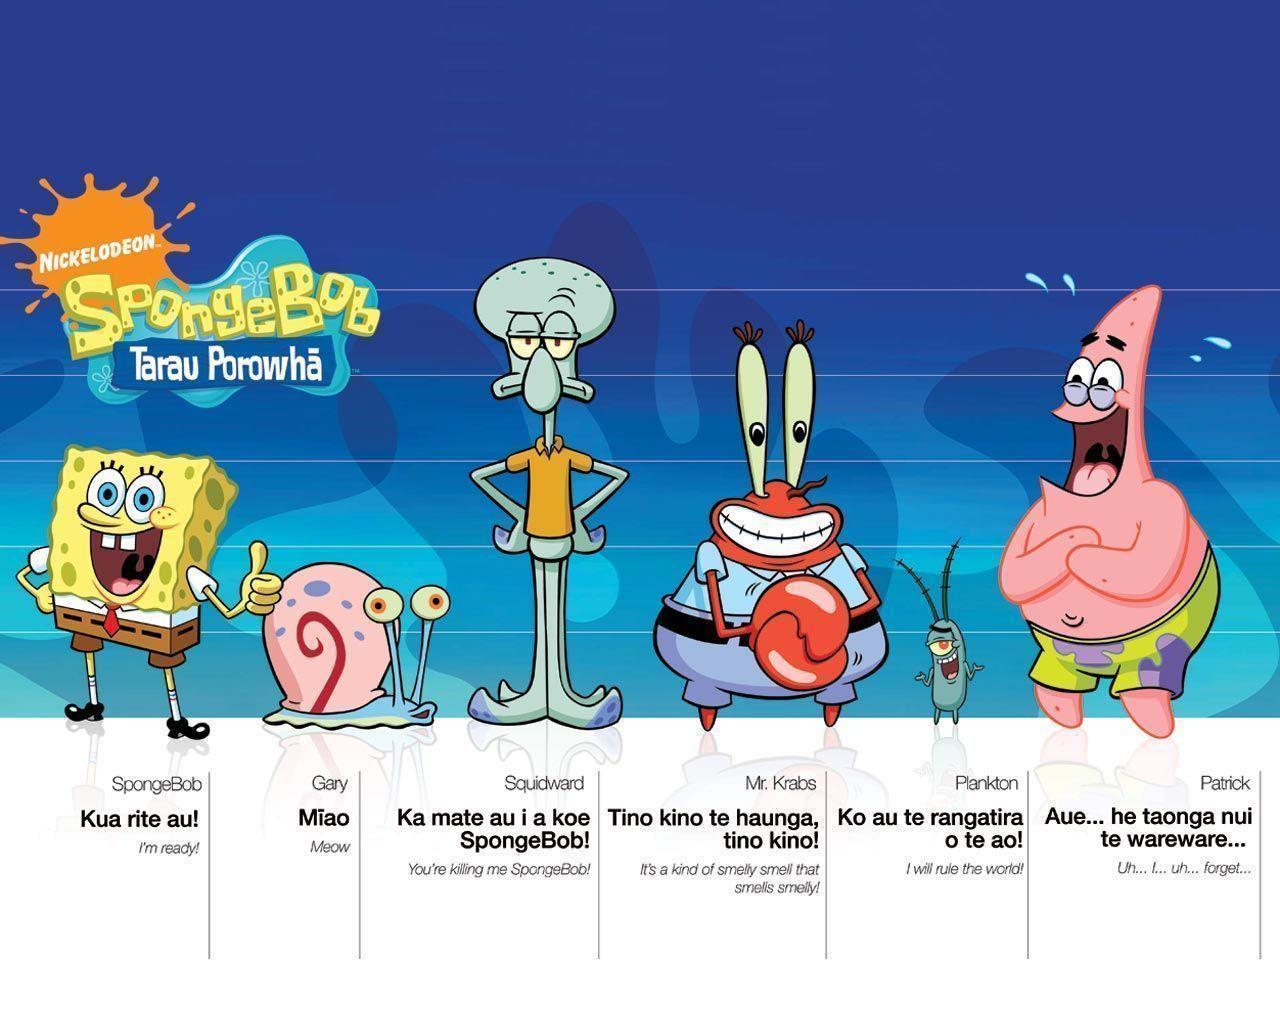 Spongebob, Squidward, Mr.krab, Plankton, and Patrick WALLPAPER